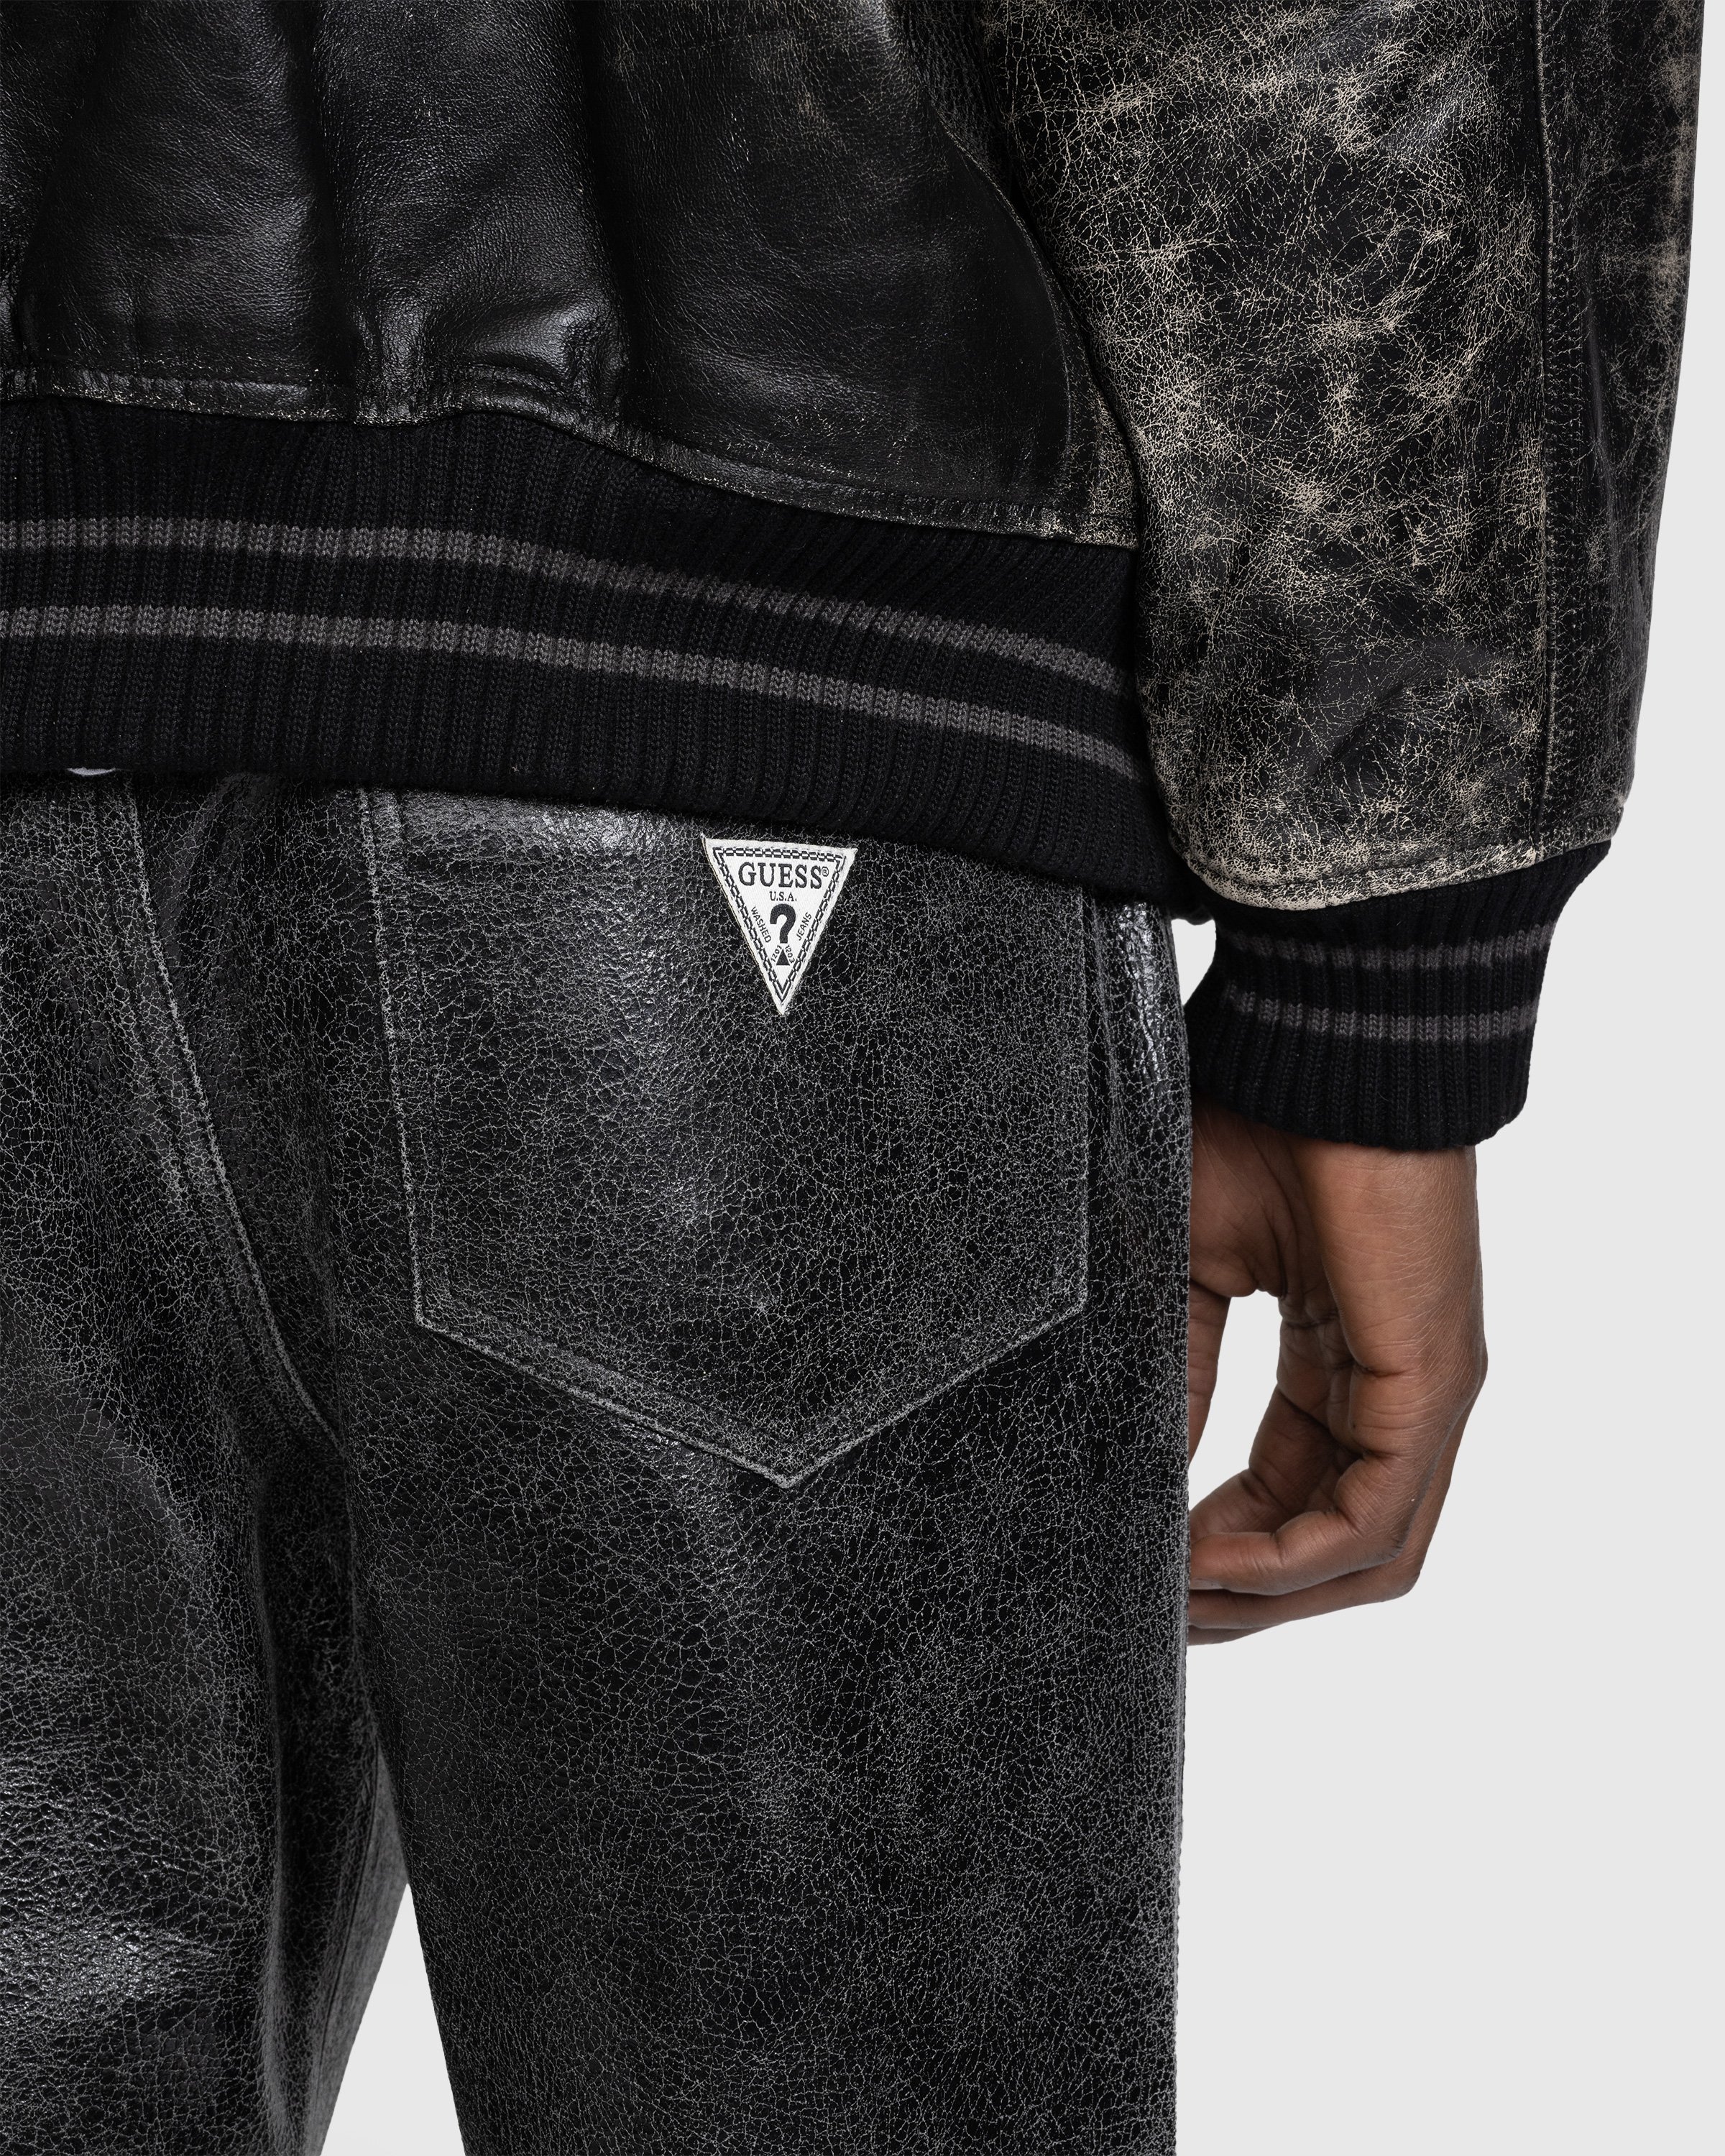 Guess USA - Crackle Leather Flare Pant Jet Black - Clothing - Black - Image 4